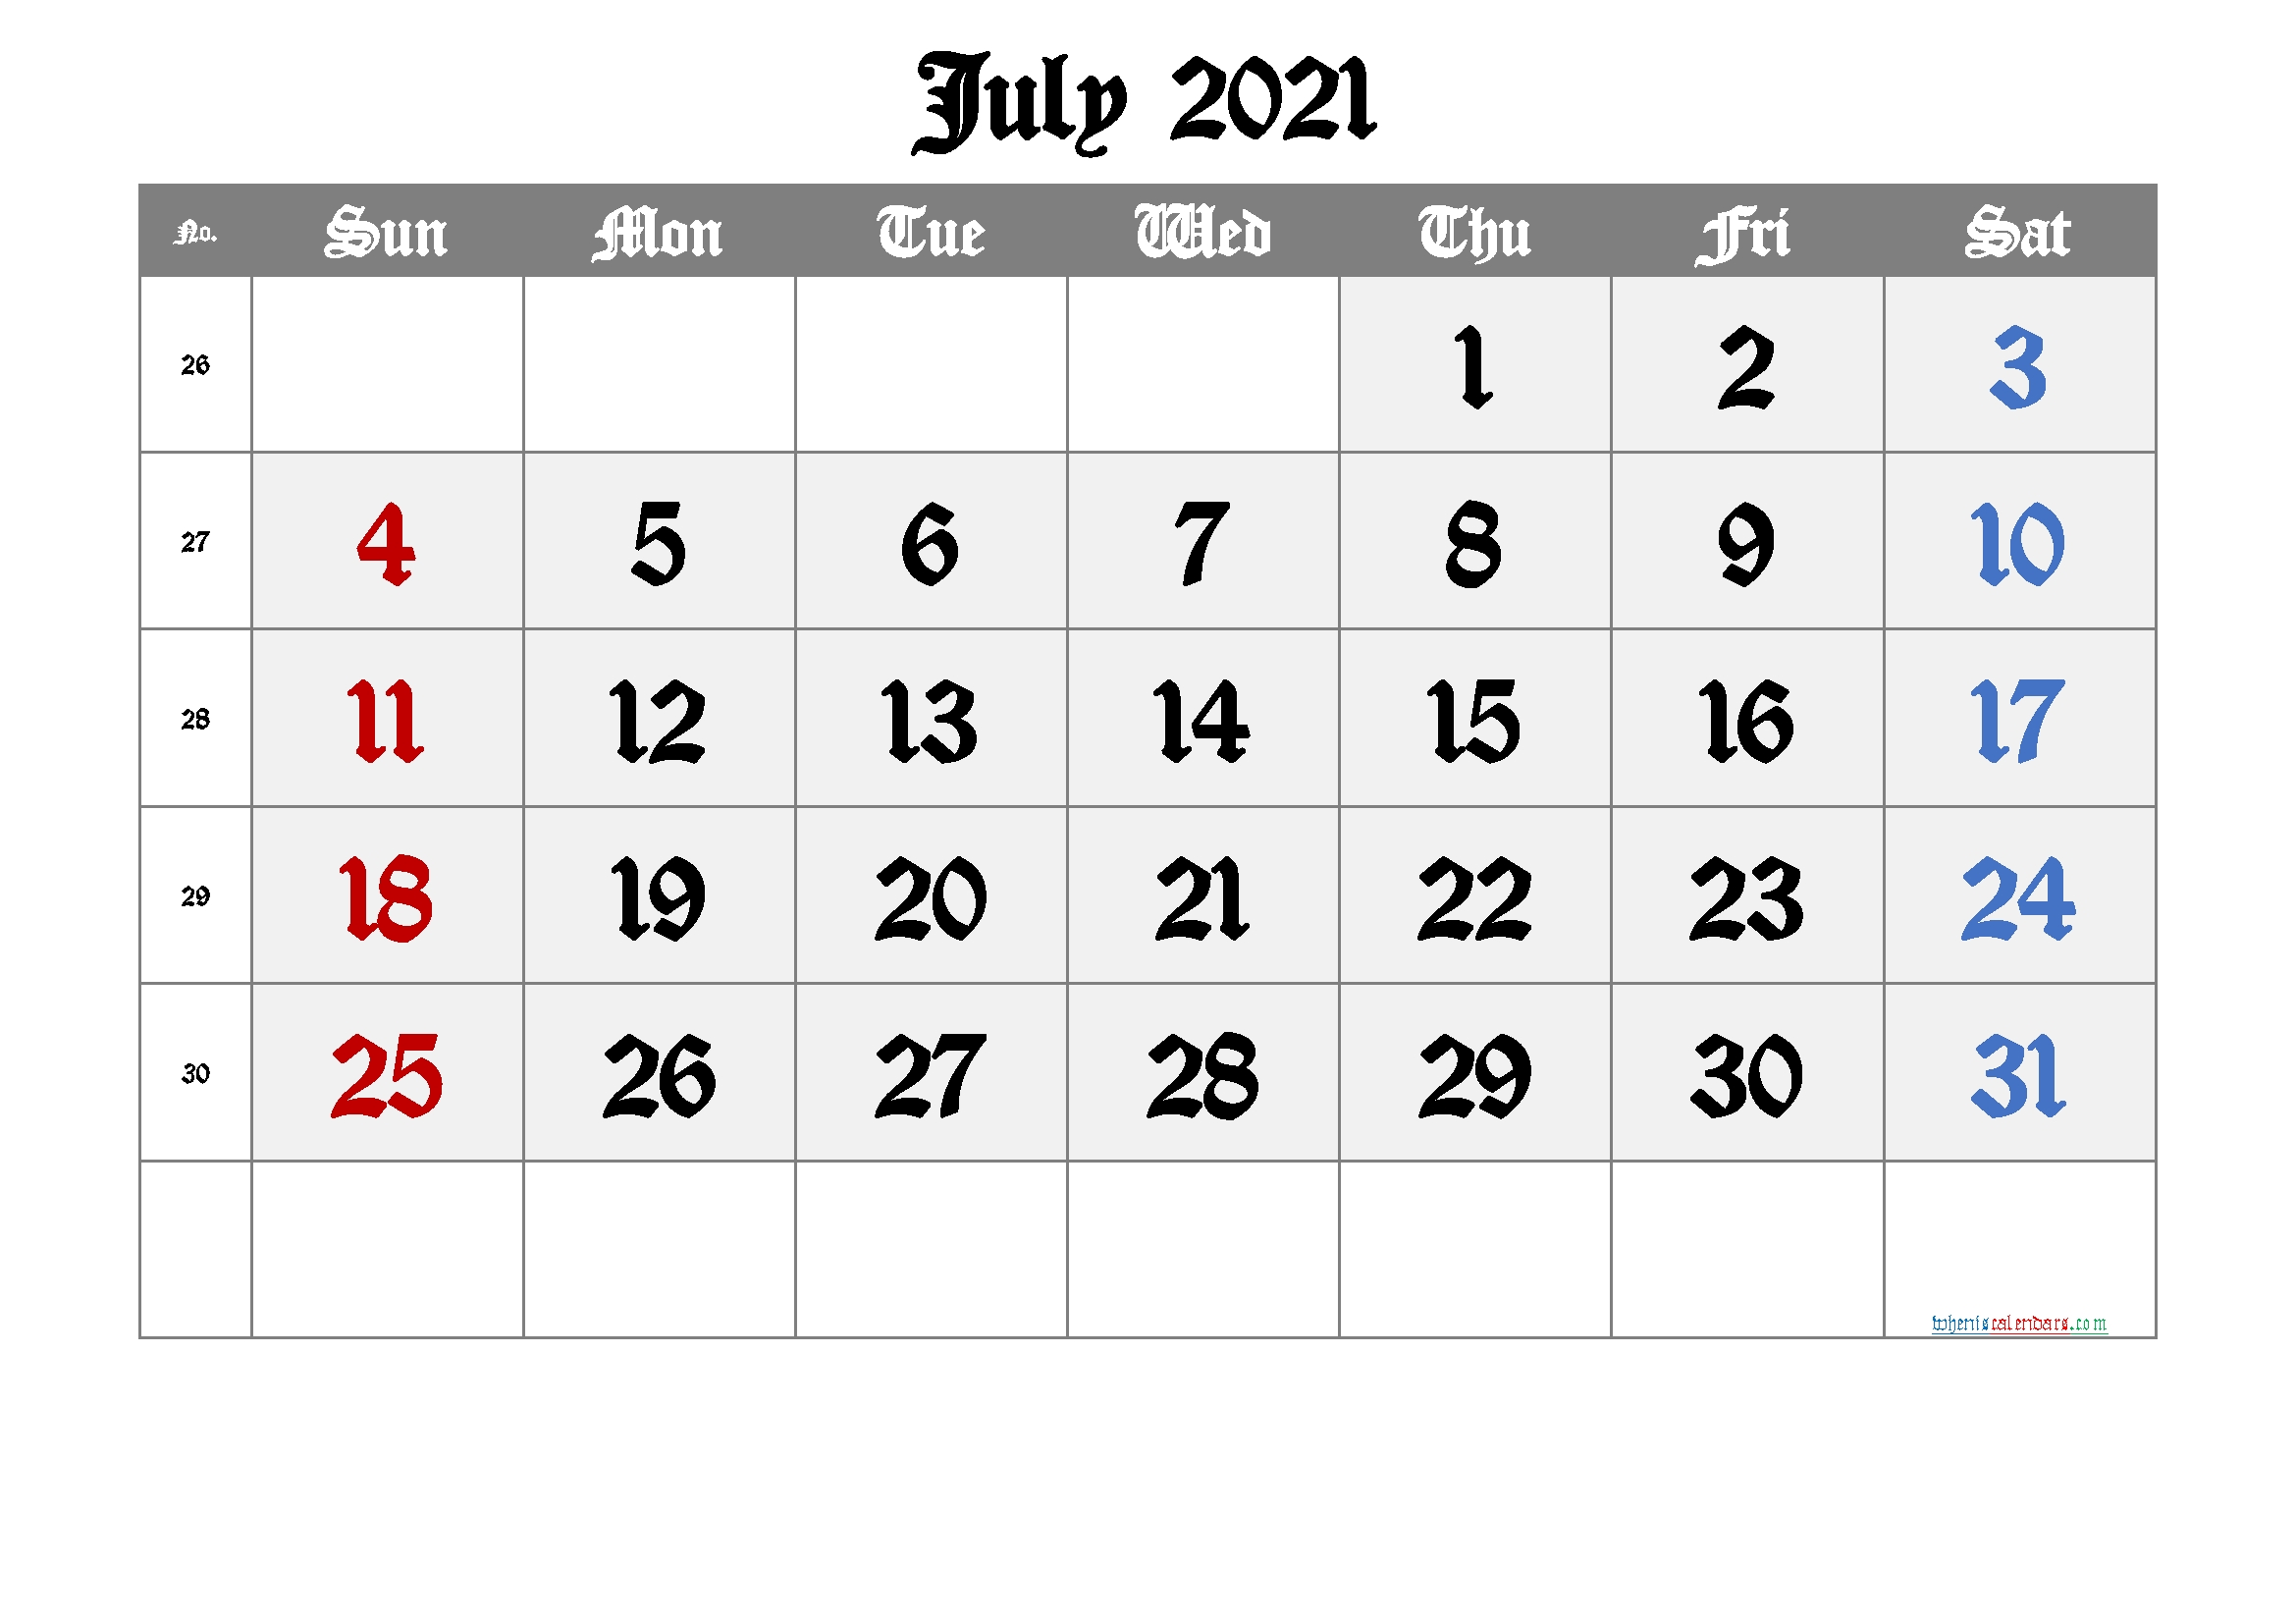 20+ 2021 Calendar Holidays - Free Download Printable Calendar Templates ️ August 2021 Calendar Philippines